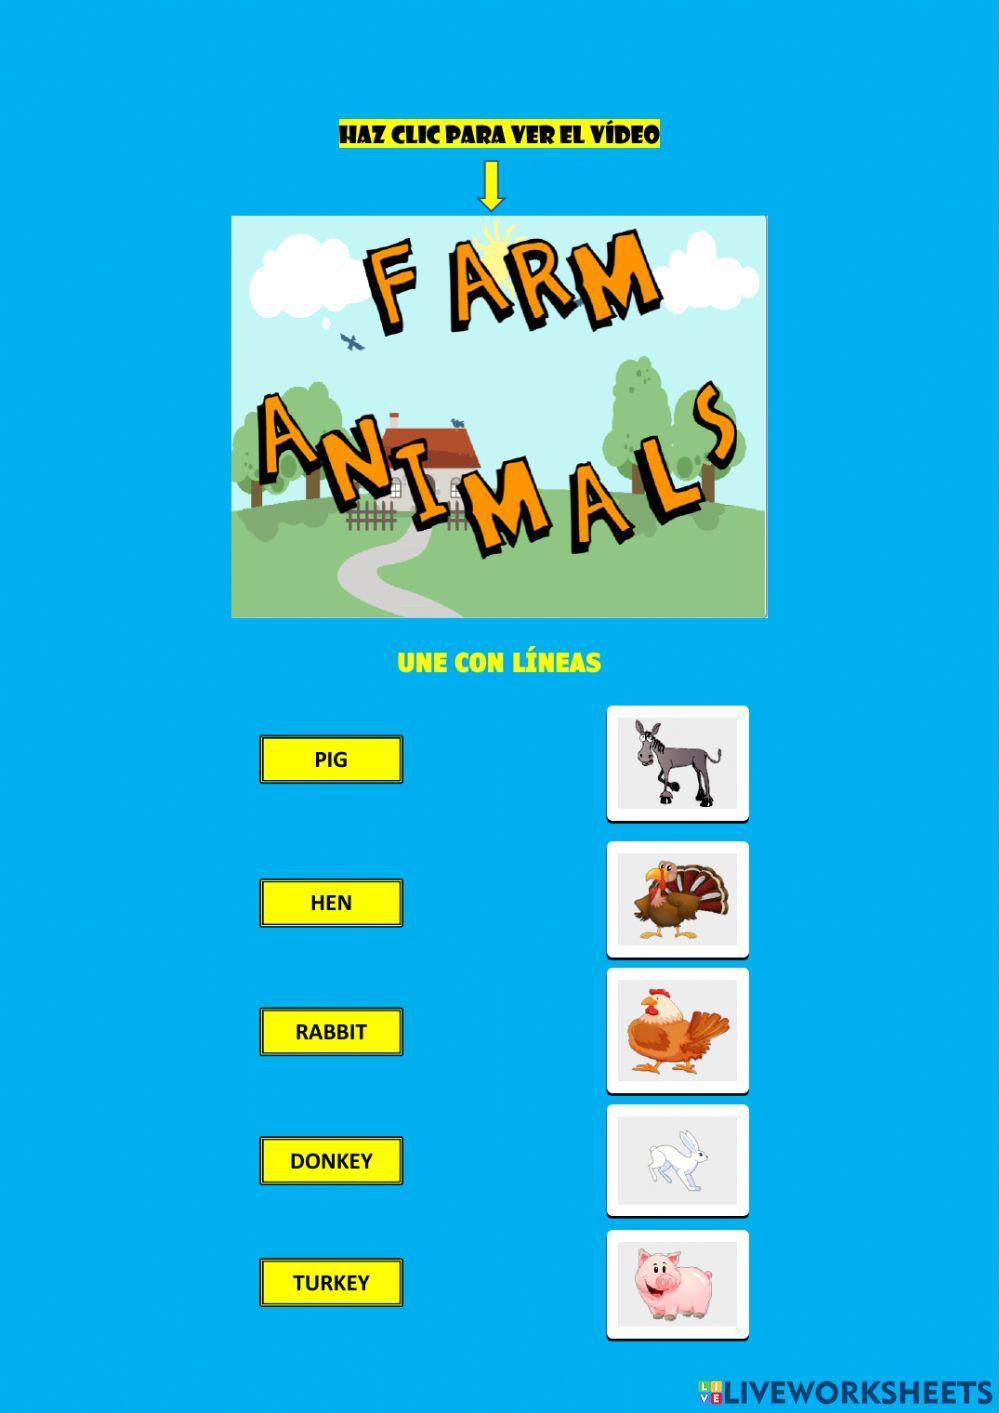 Los animales de la granja. the farm animals